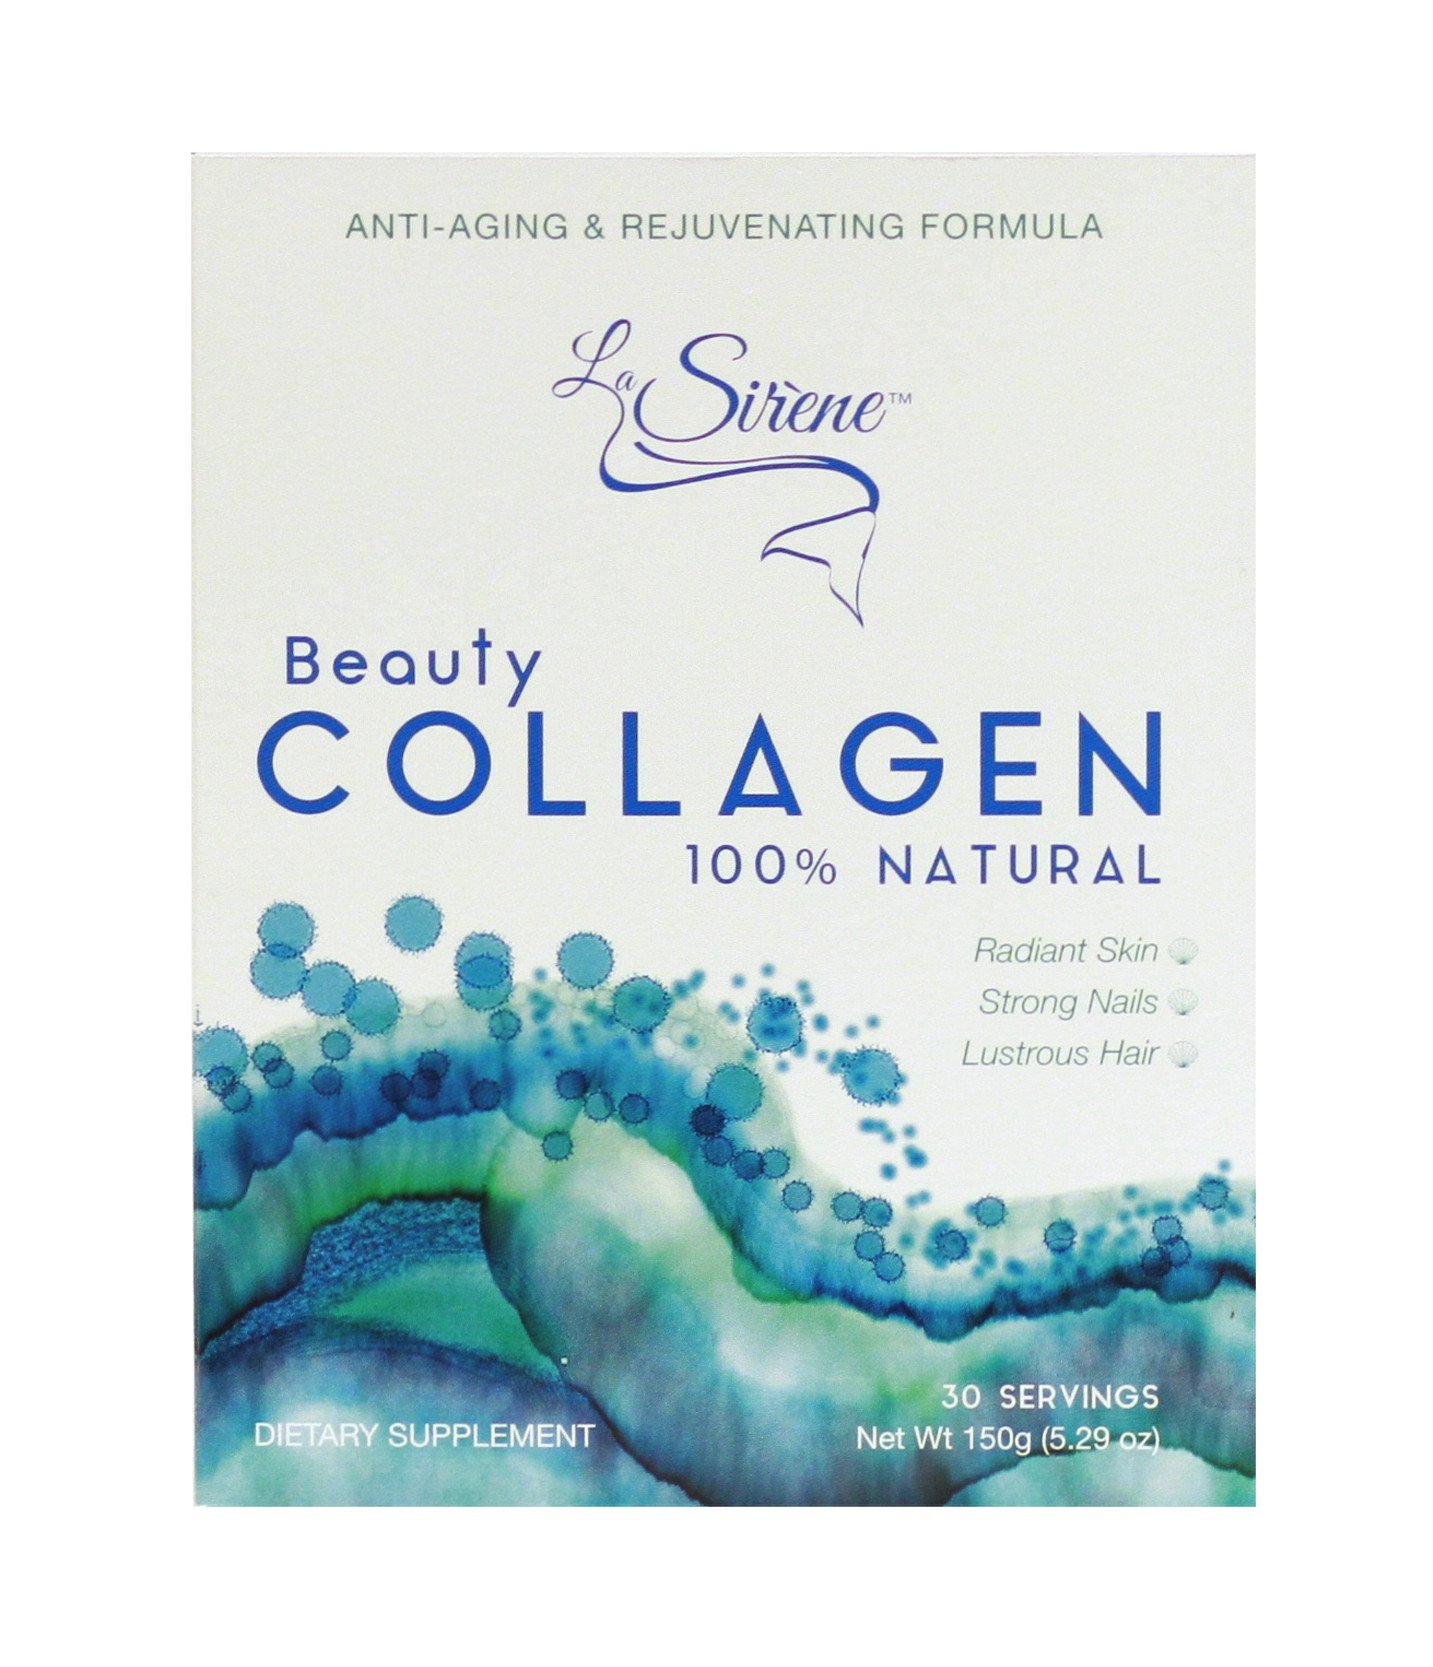 Box of La Sirene Beauty Collagen dietary supplement 